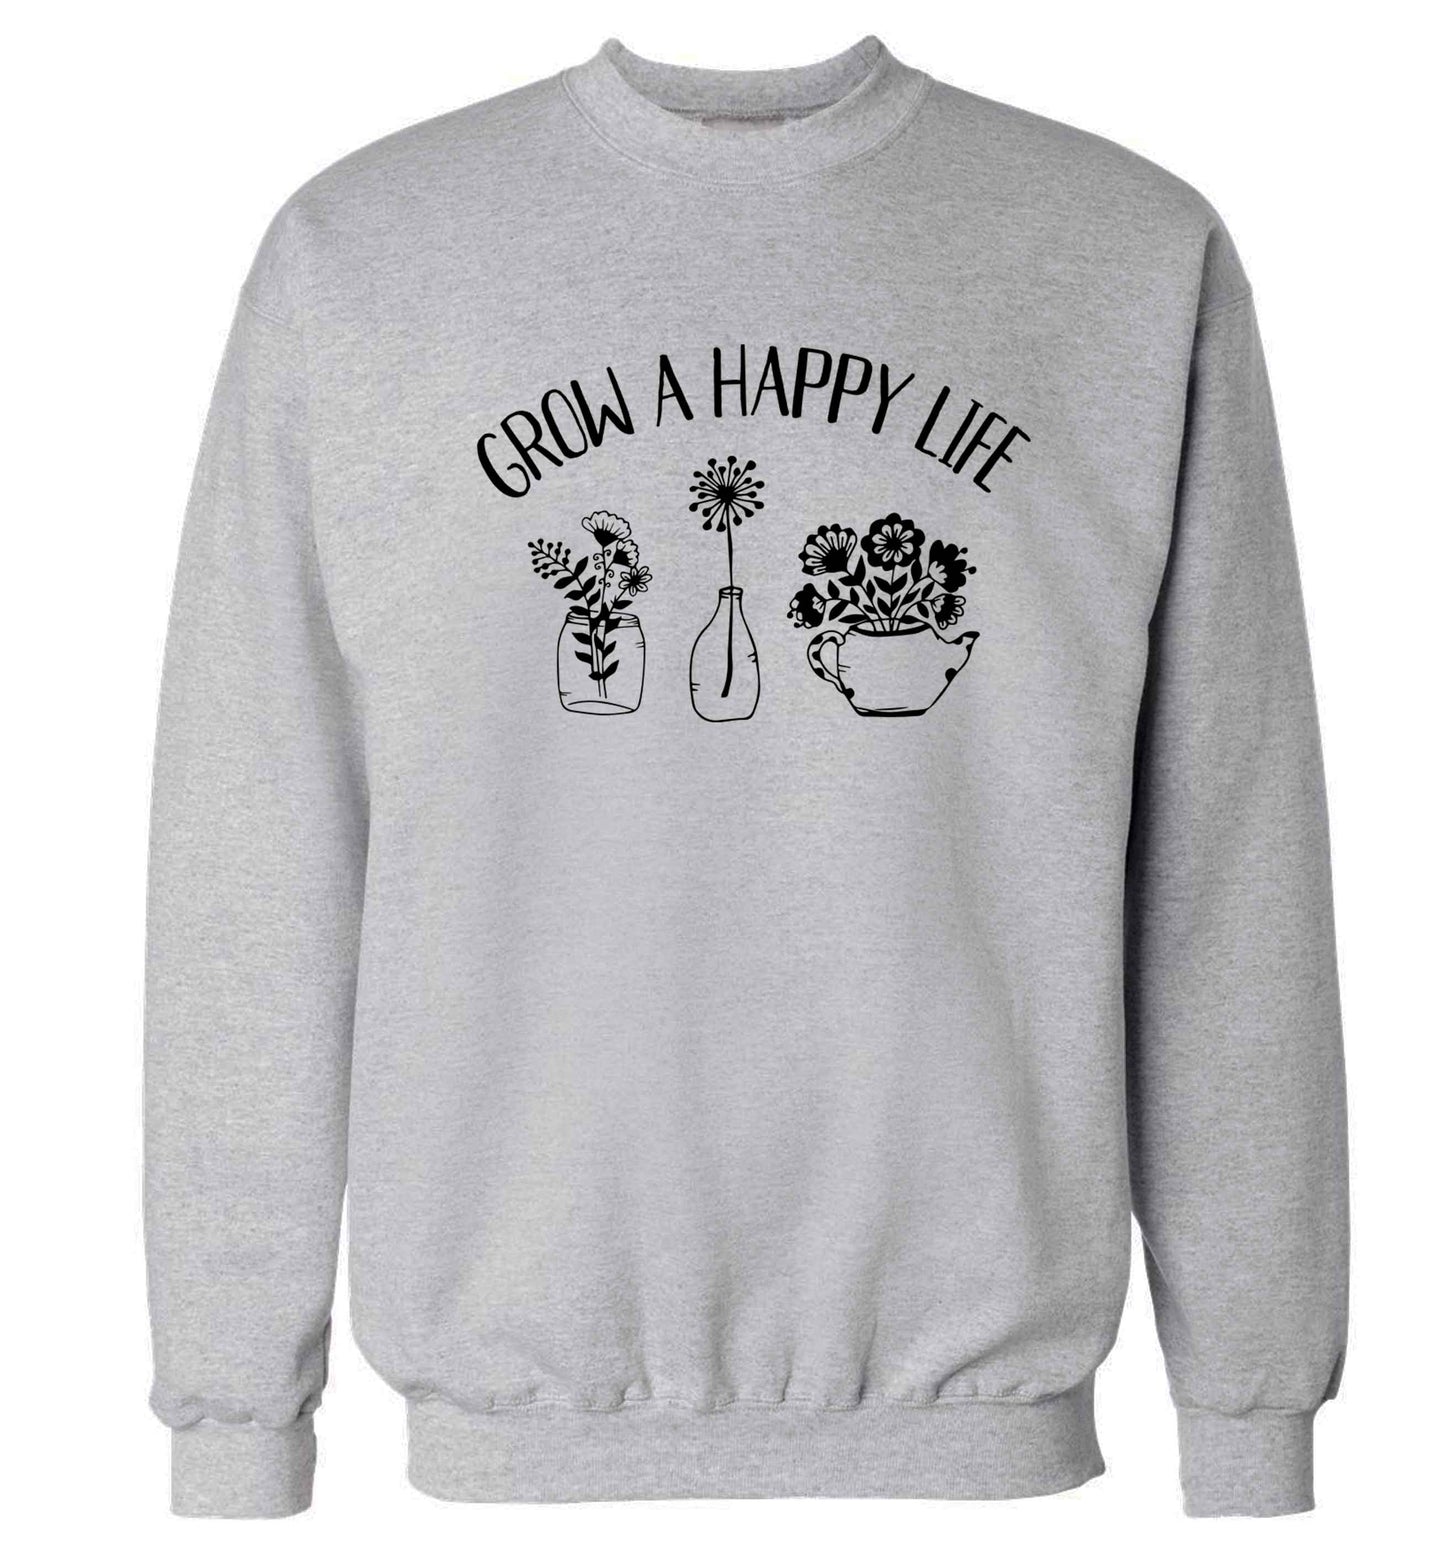 Grow a happy life Adult's unisex grey Sweater 2XL